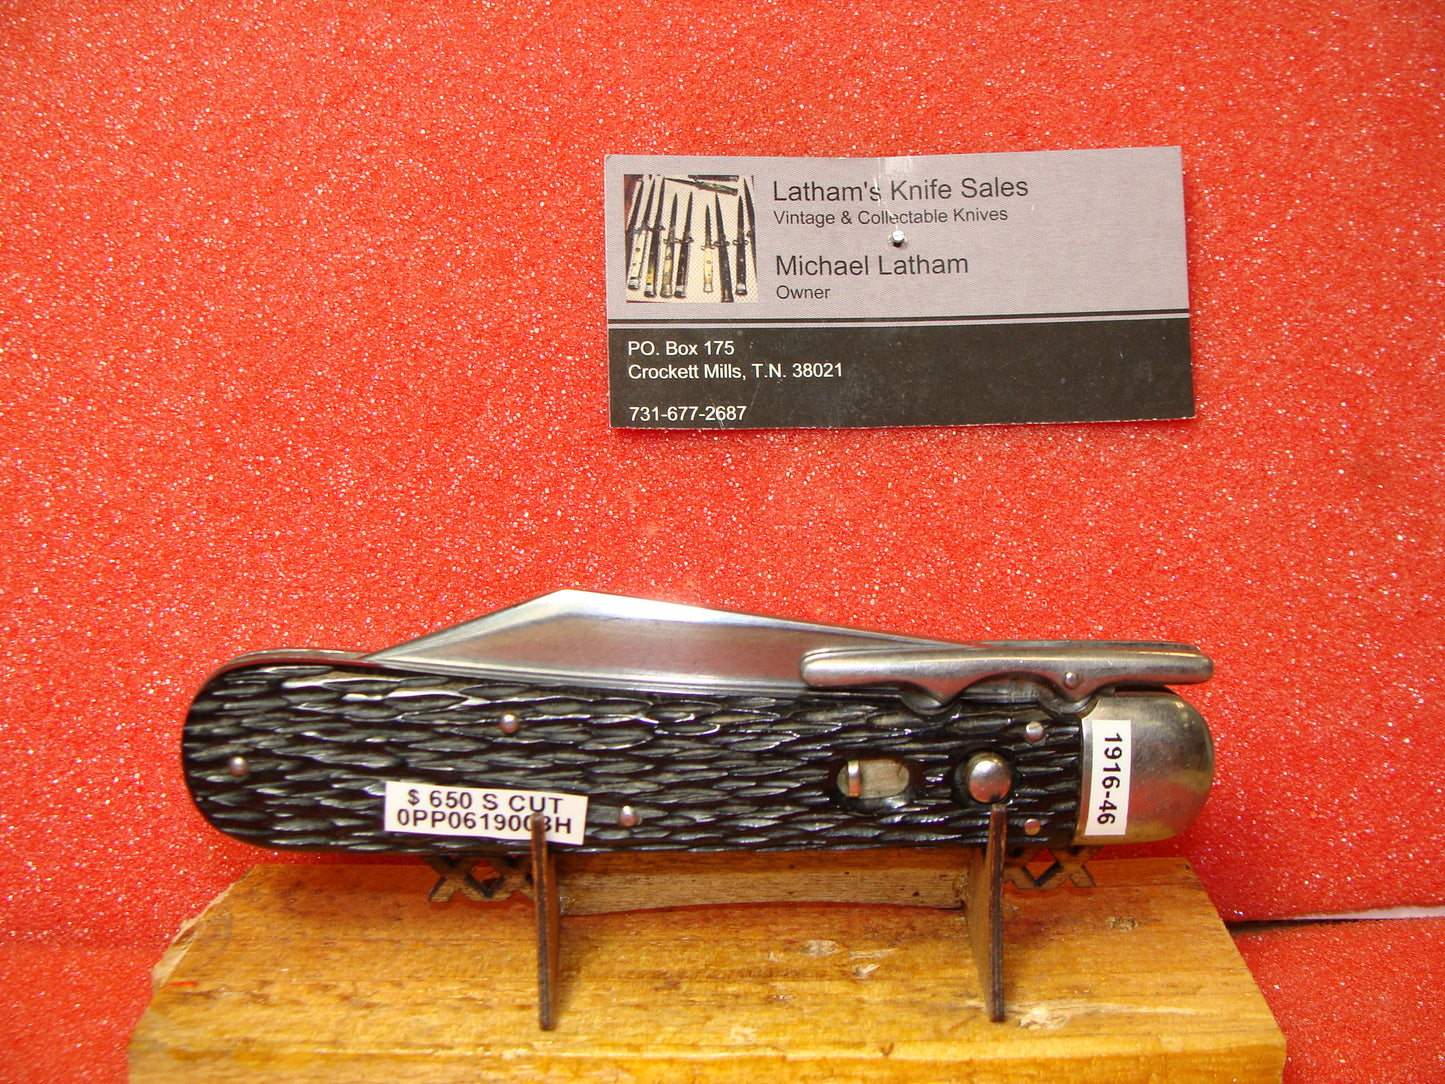 SCHRADE CUT CO. WALDEN NY 1916-46 VINTAGE AMERICAN AUTOMATIC KNIFE 4 7/8" HUNTER PRIDE SWING GUARD BLACK IMITATION JIGGED HANDLES